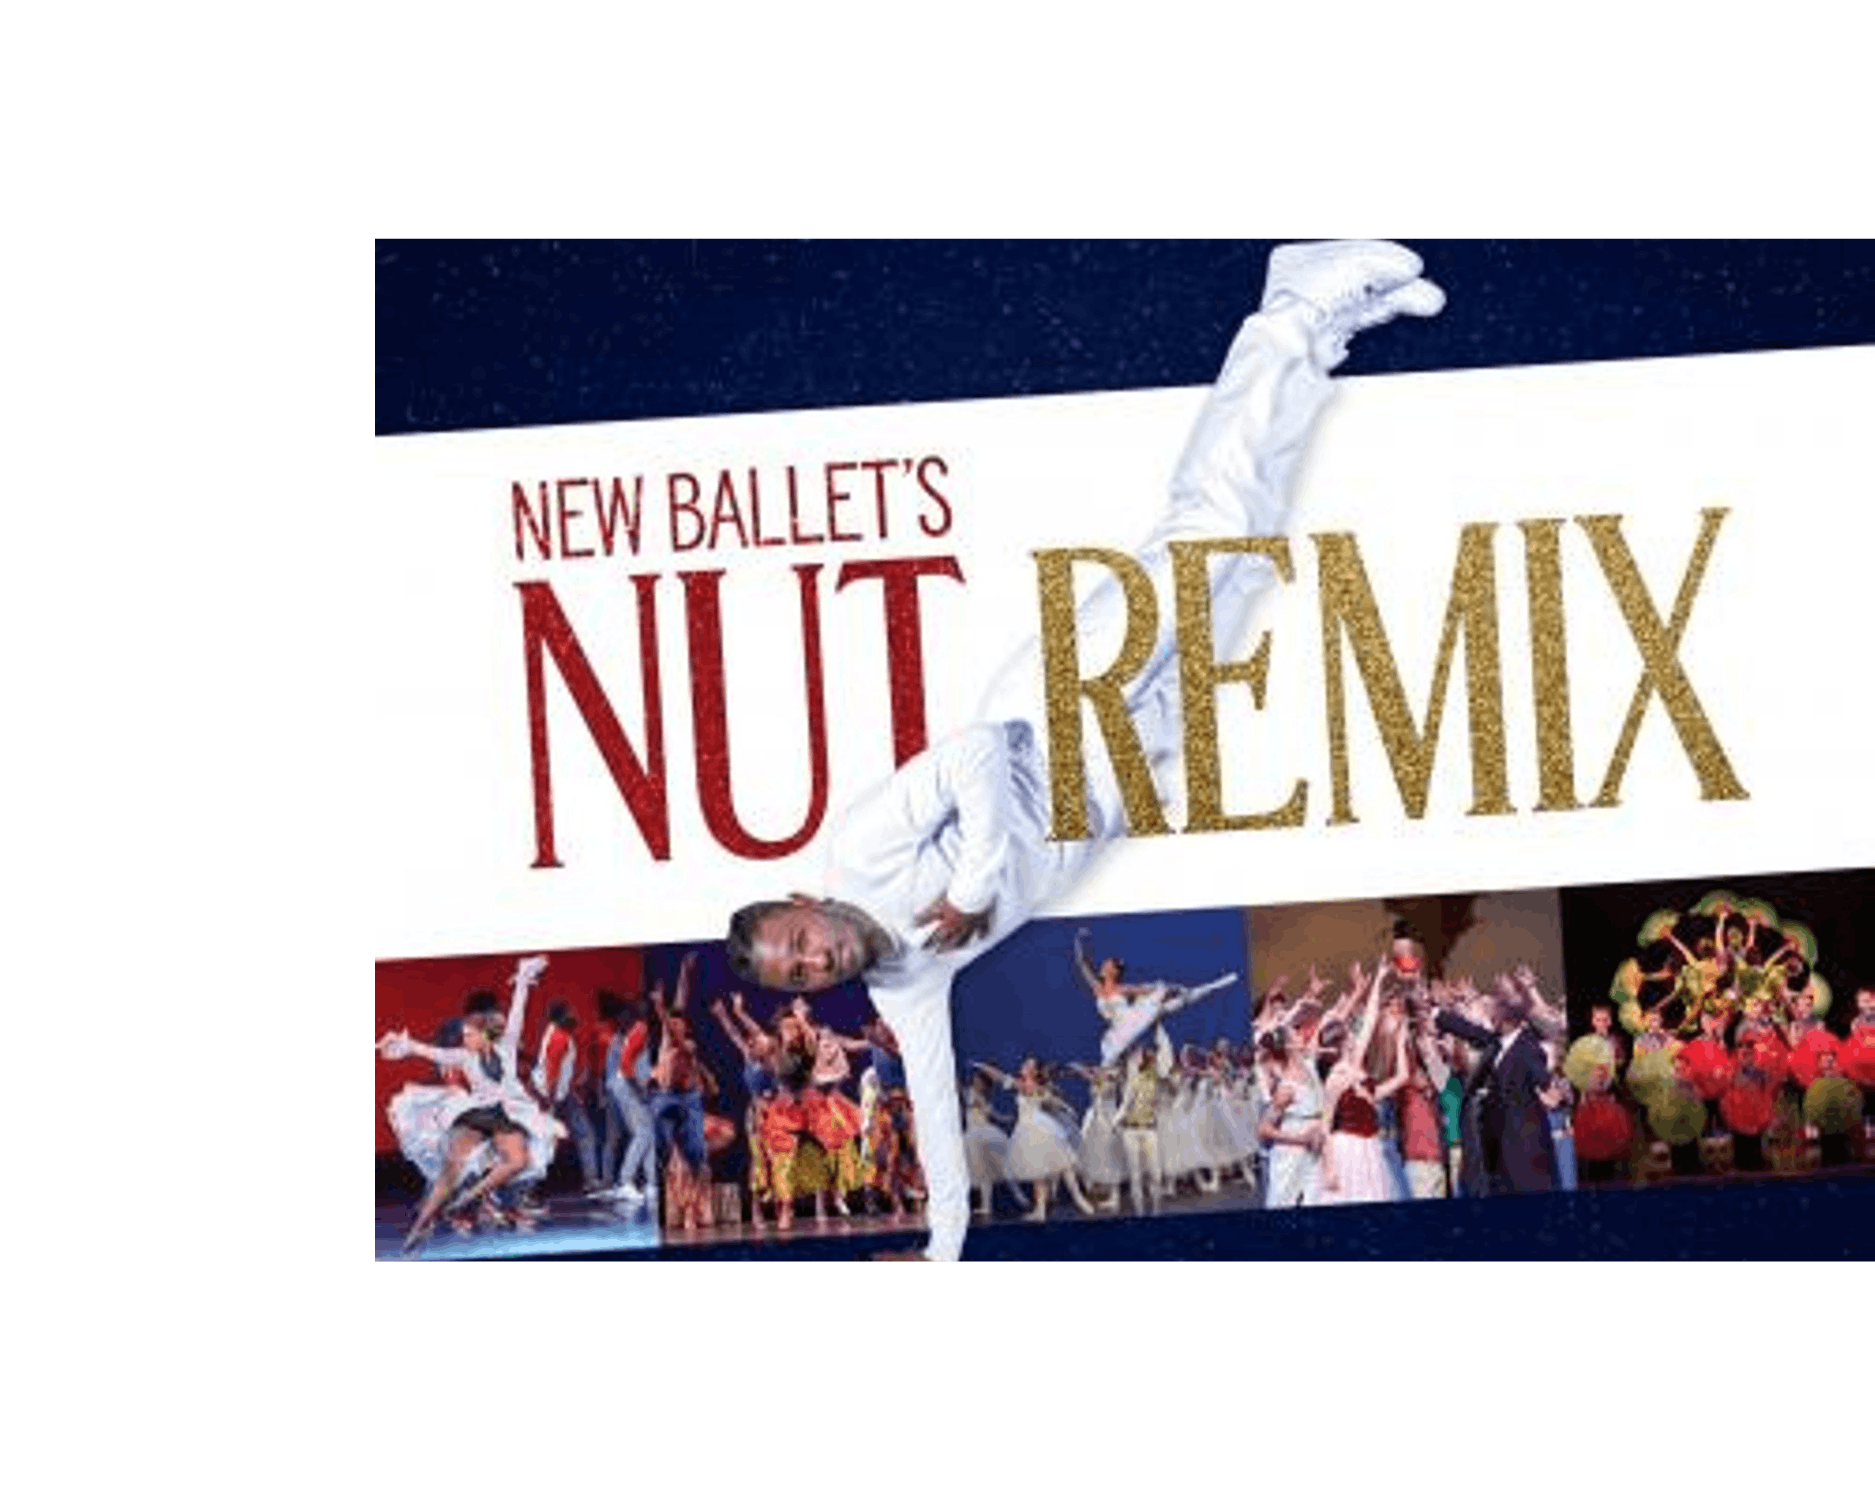 New Ballet’s Nut Remix